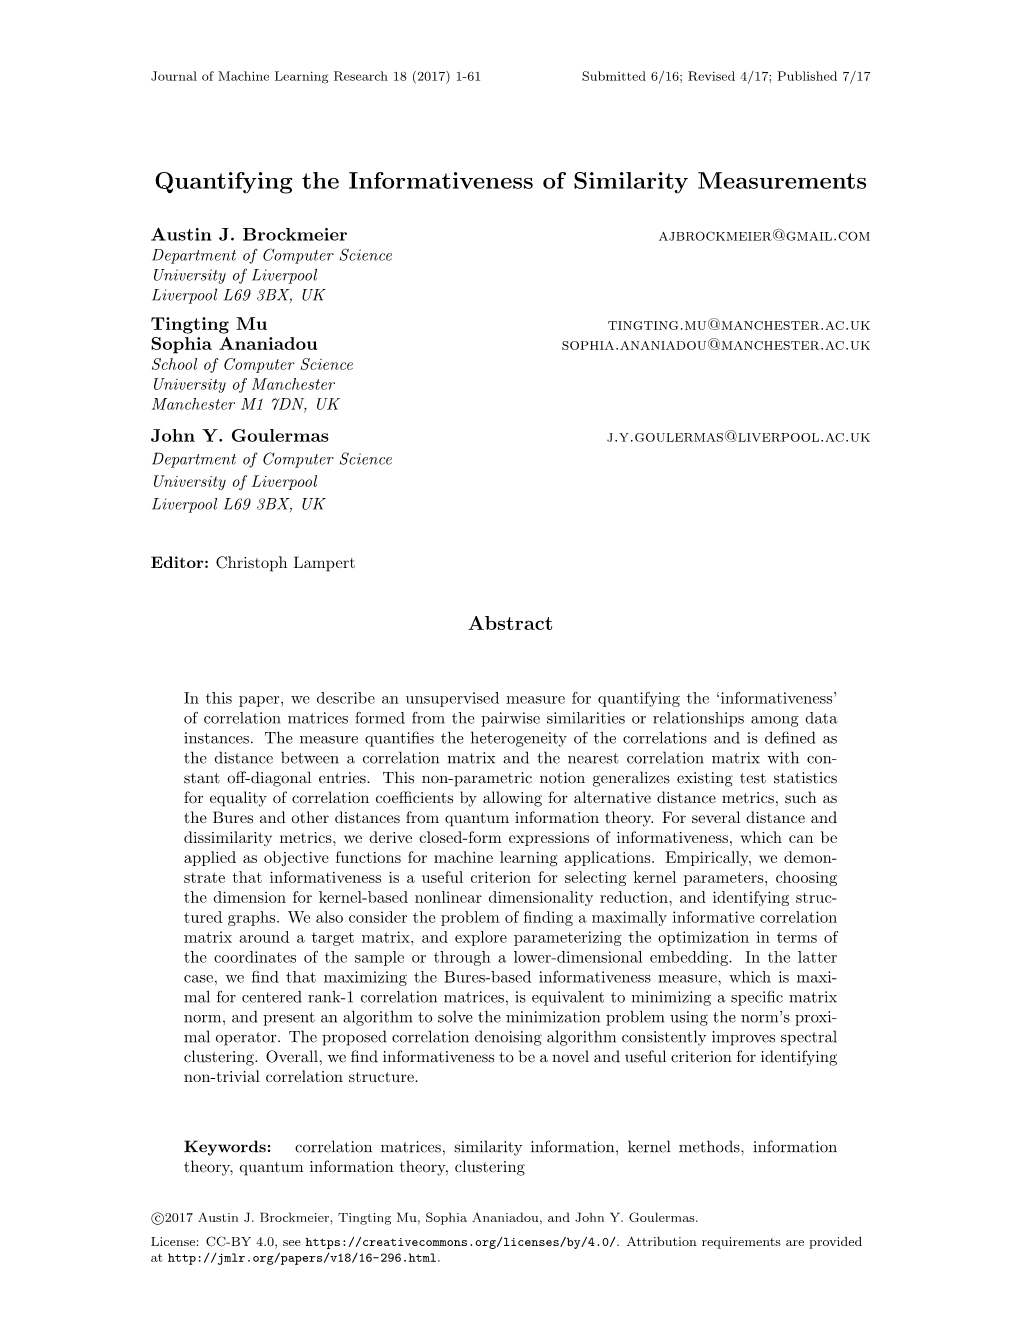 Quantifying the Informativeness of Similarity Measurements